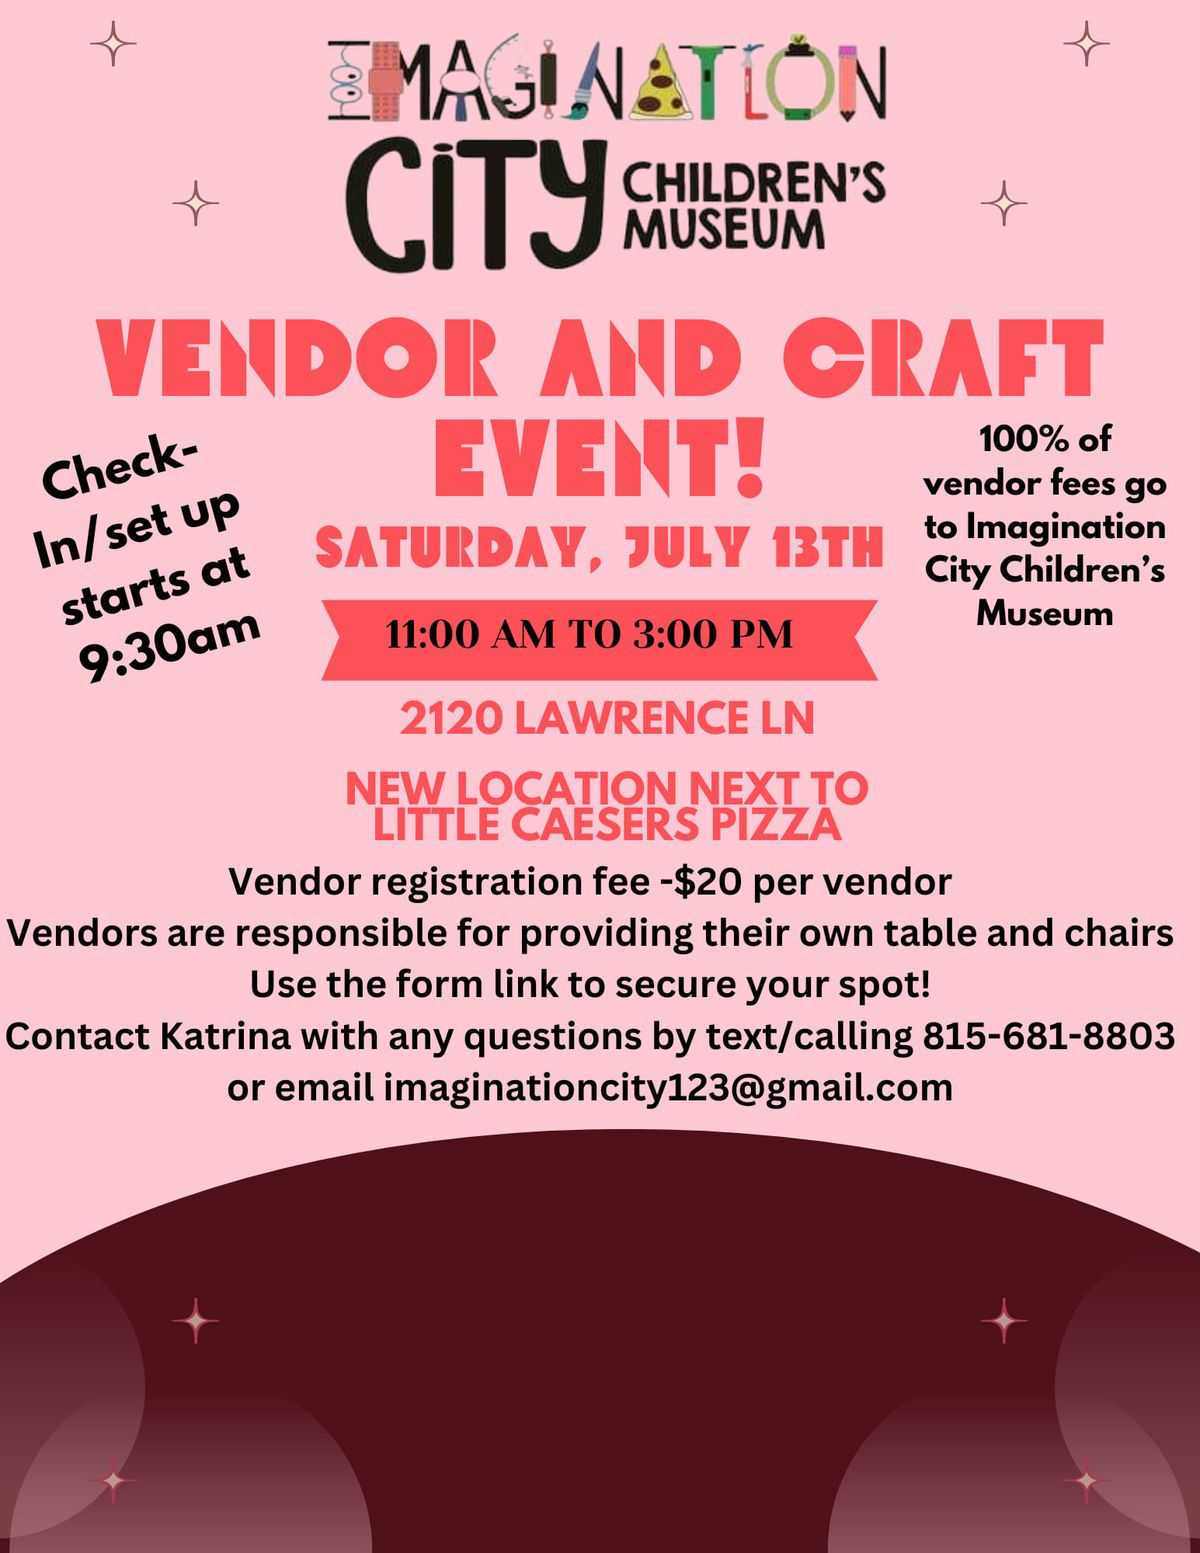 Vendor and Craft fundraiser